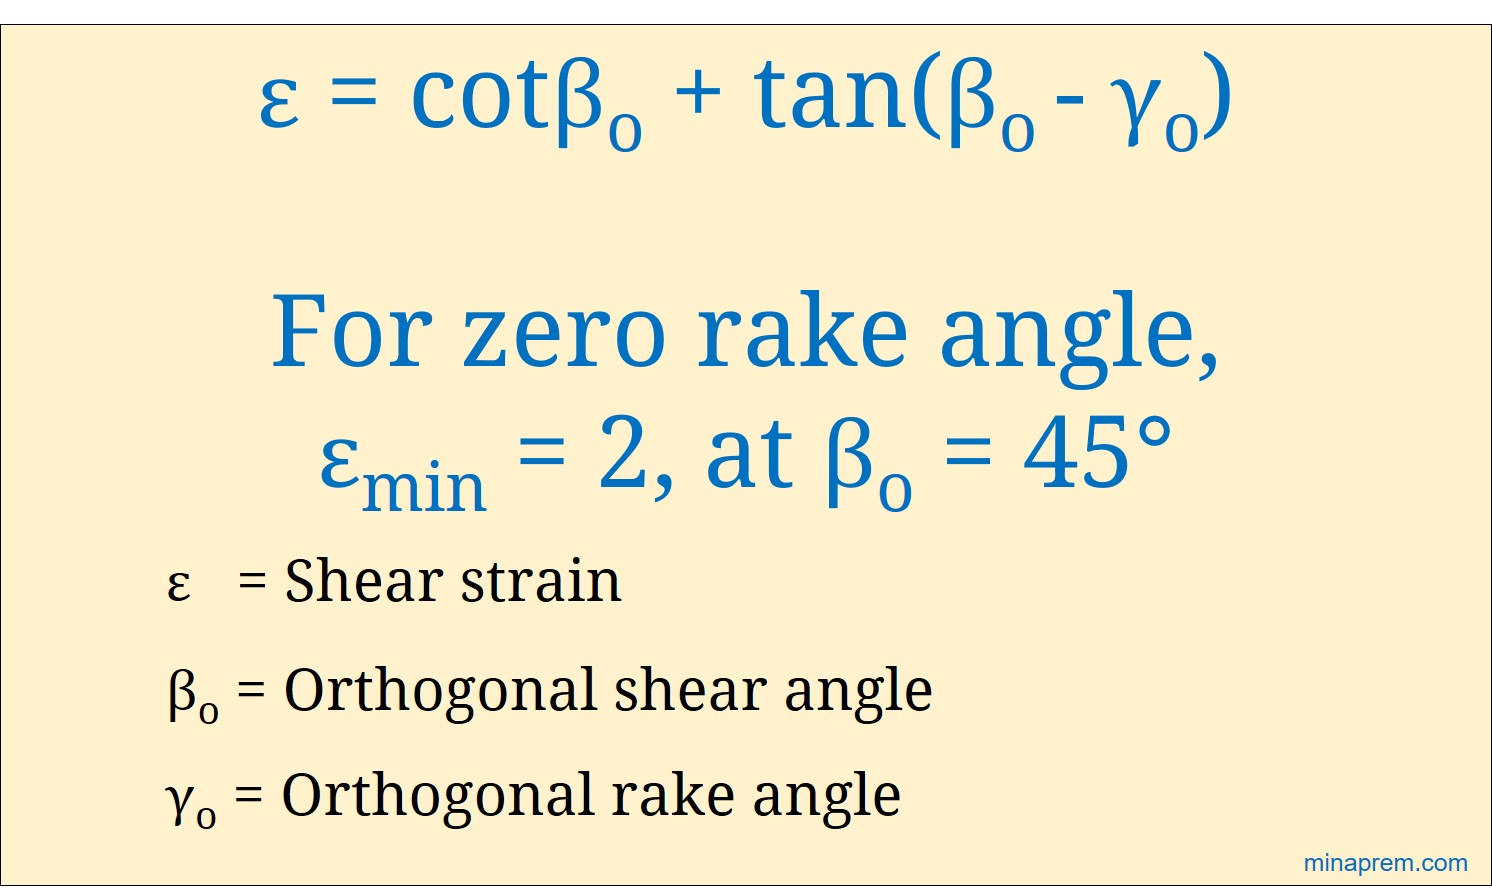 Minimum shear strain in turning with a zero rake angle cutter